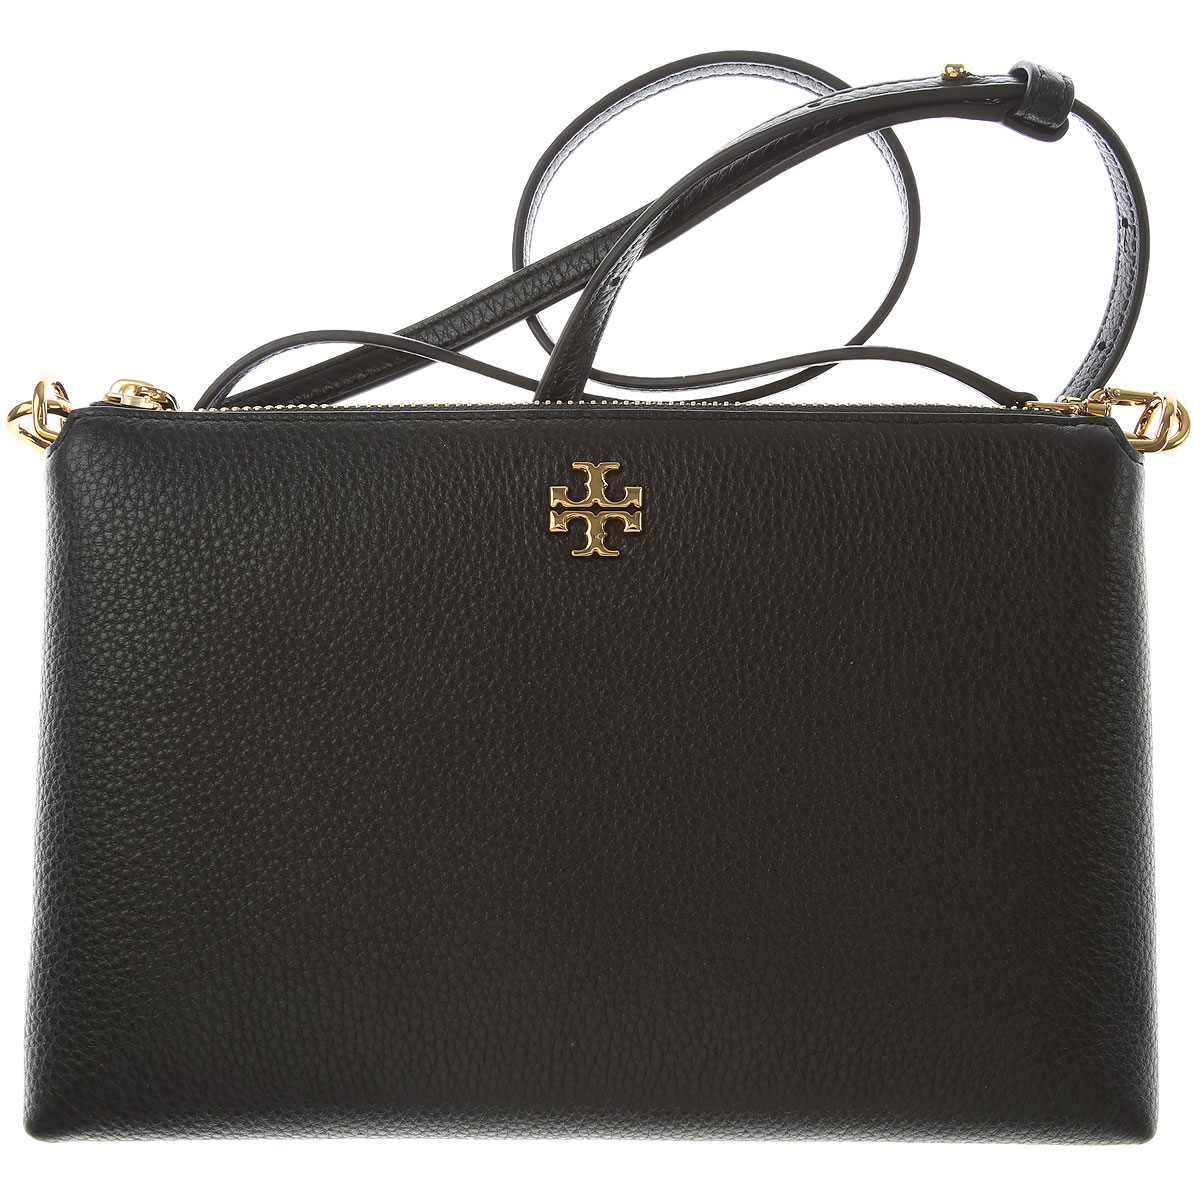 Handbags Tory Burch, Style code: 61385-001-C249